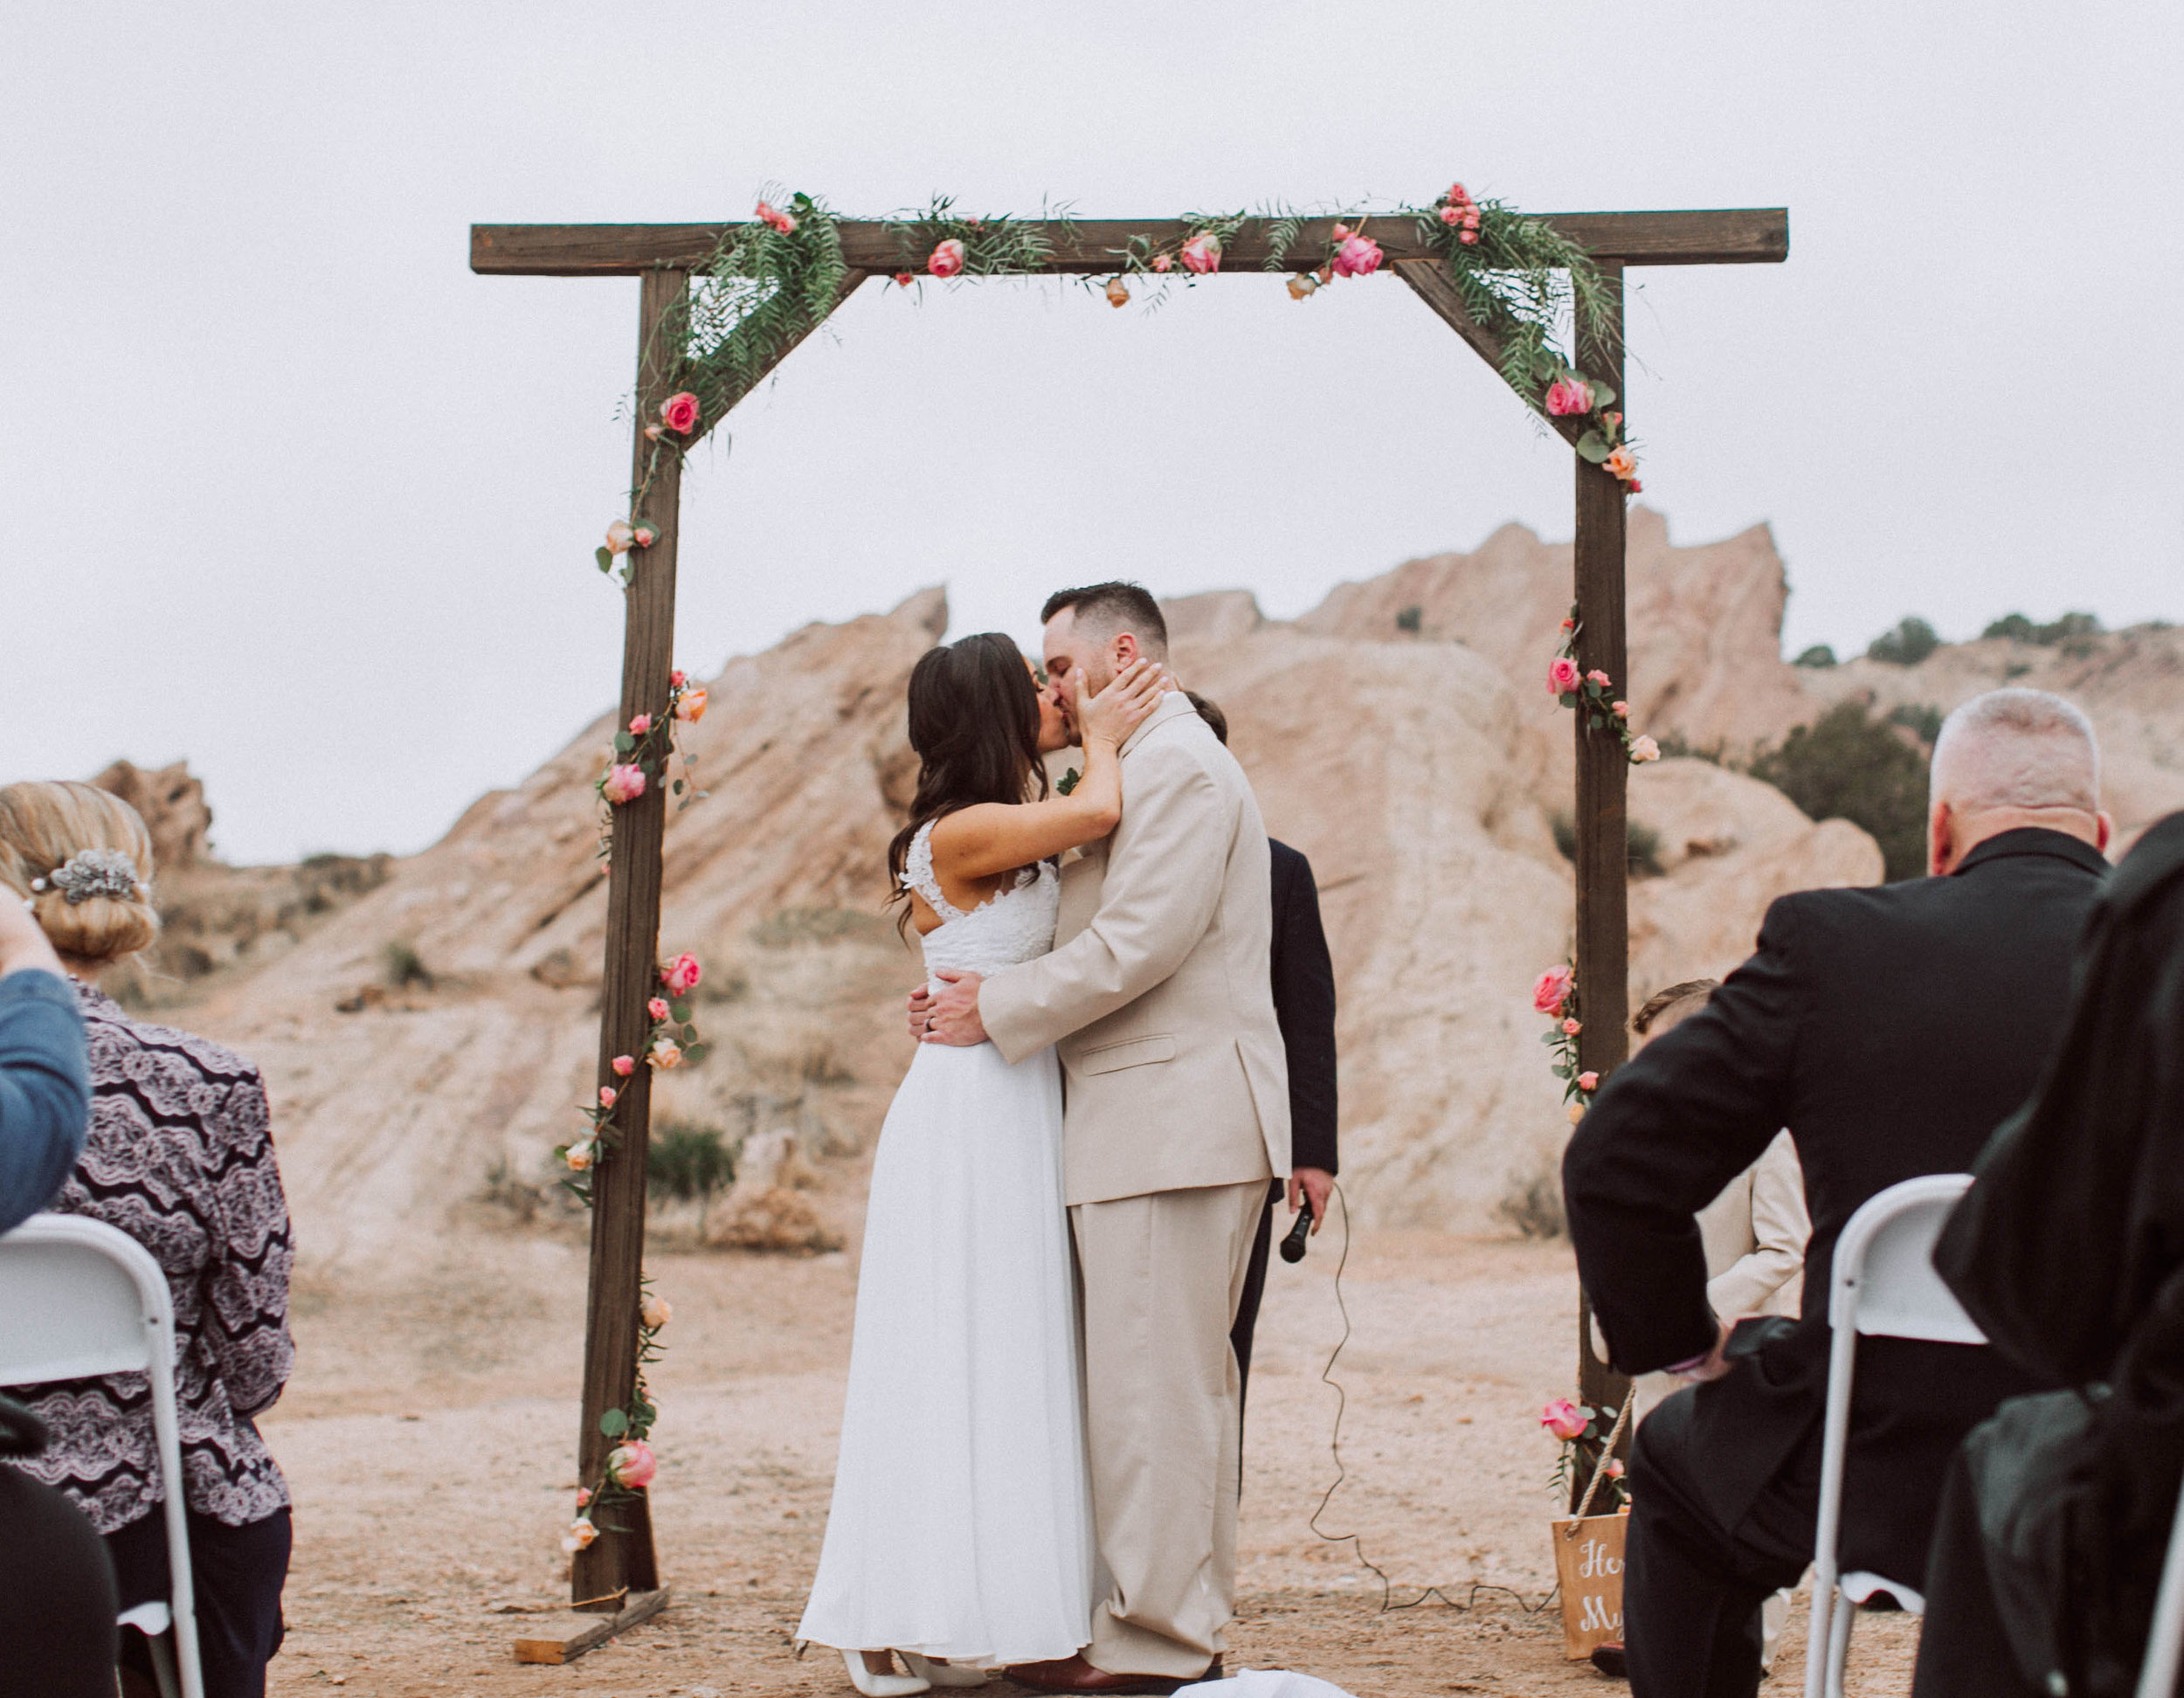 Vasquez Rocks Intimate Wedding & Elopement Photography - first kiss